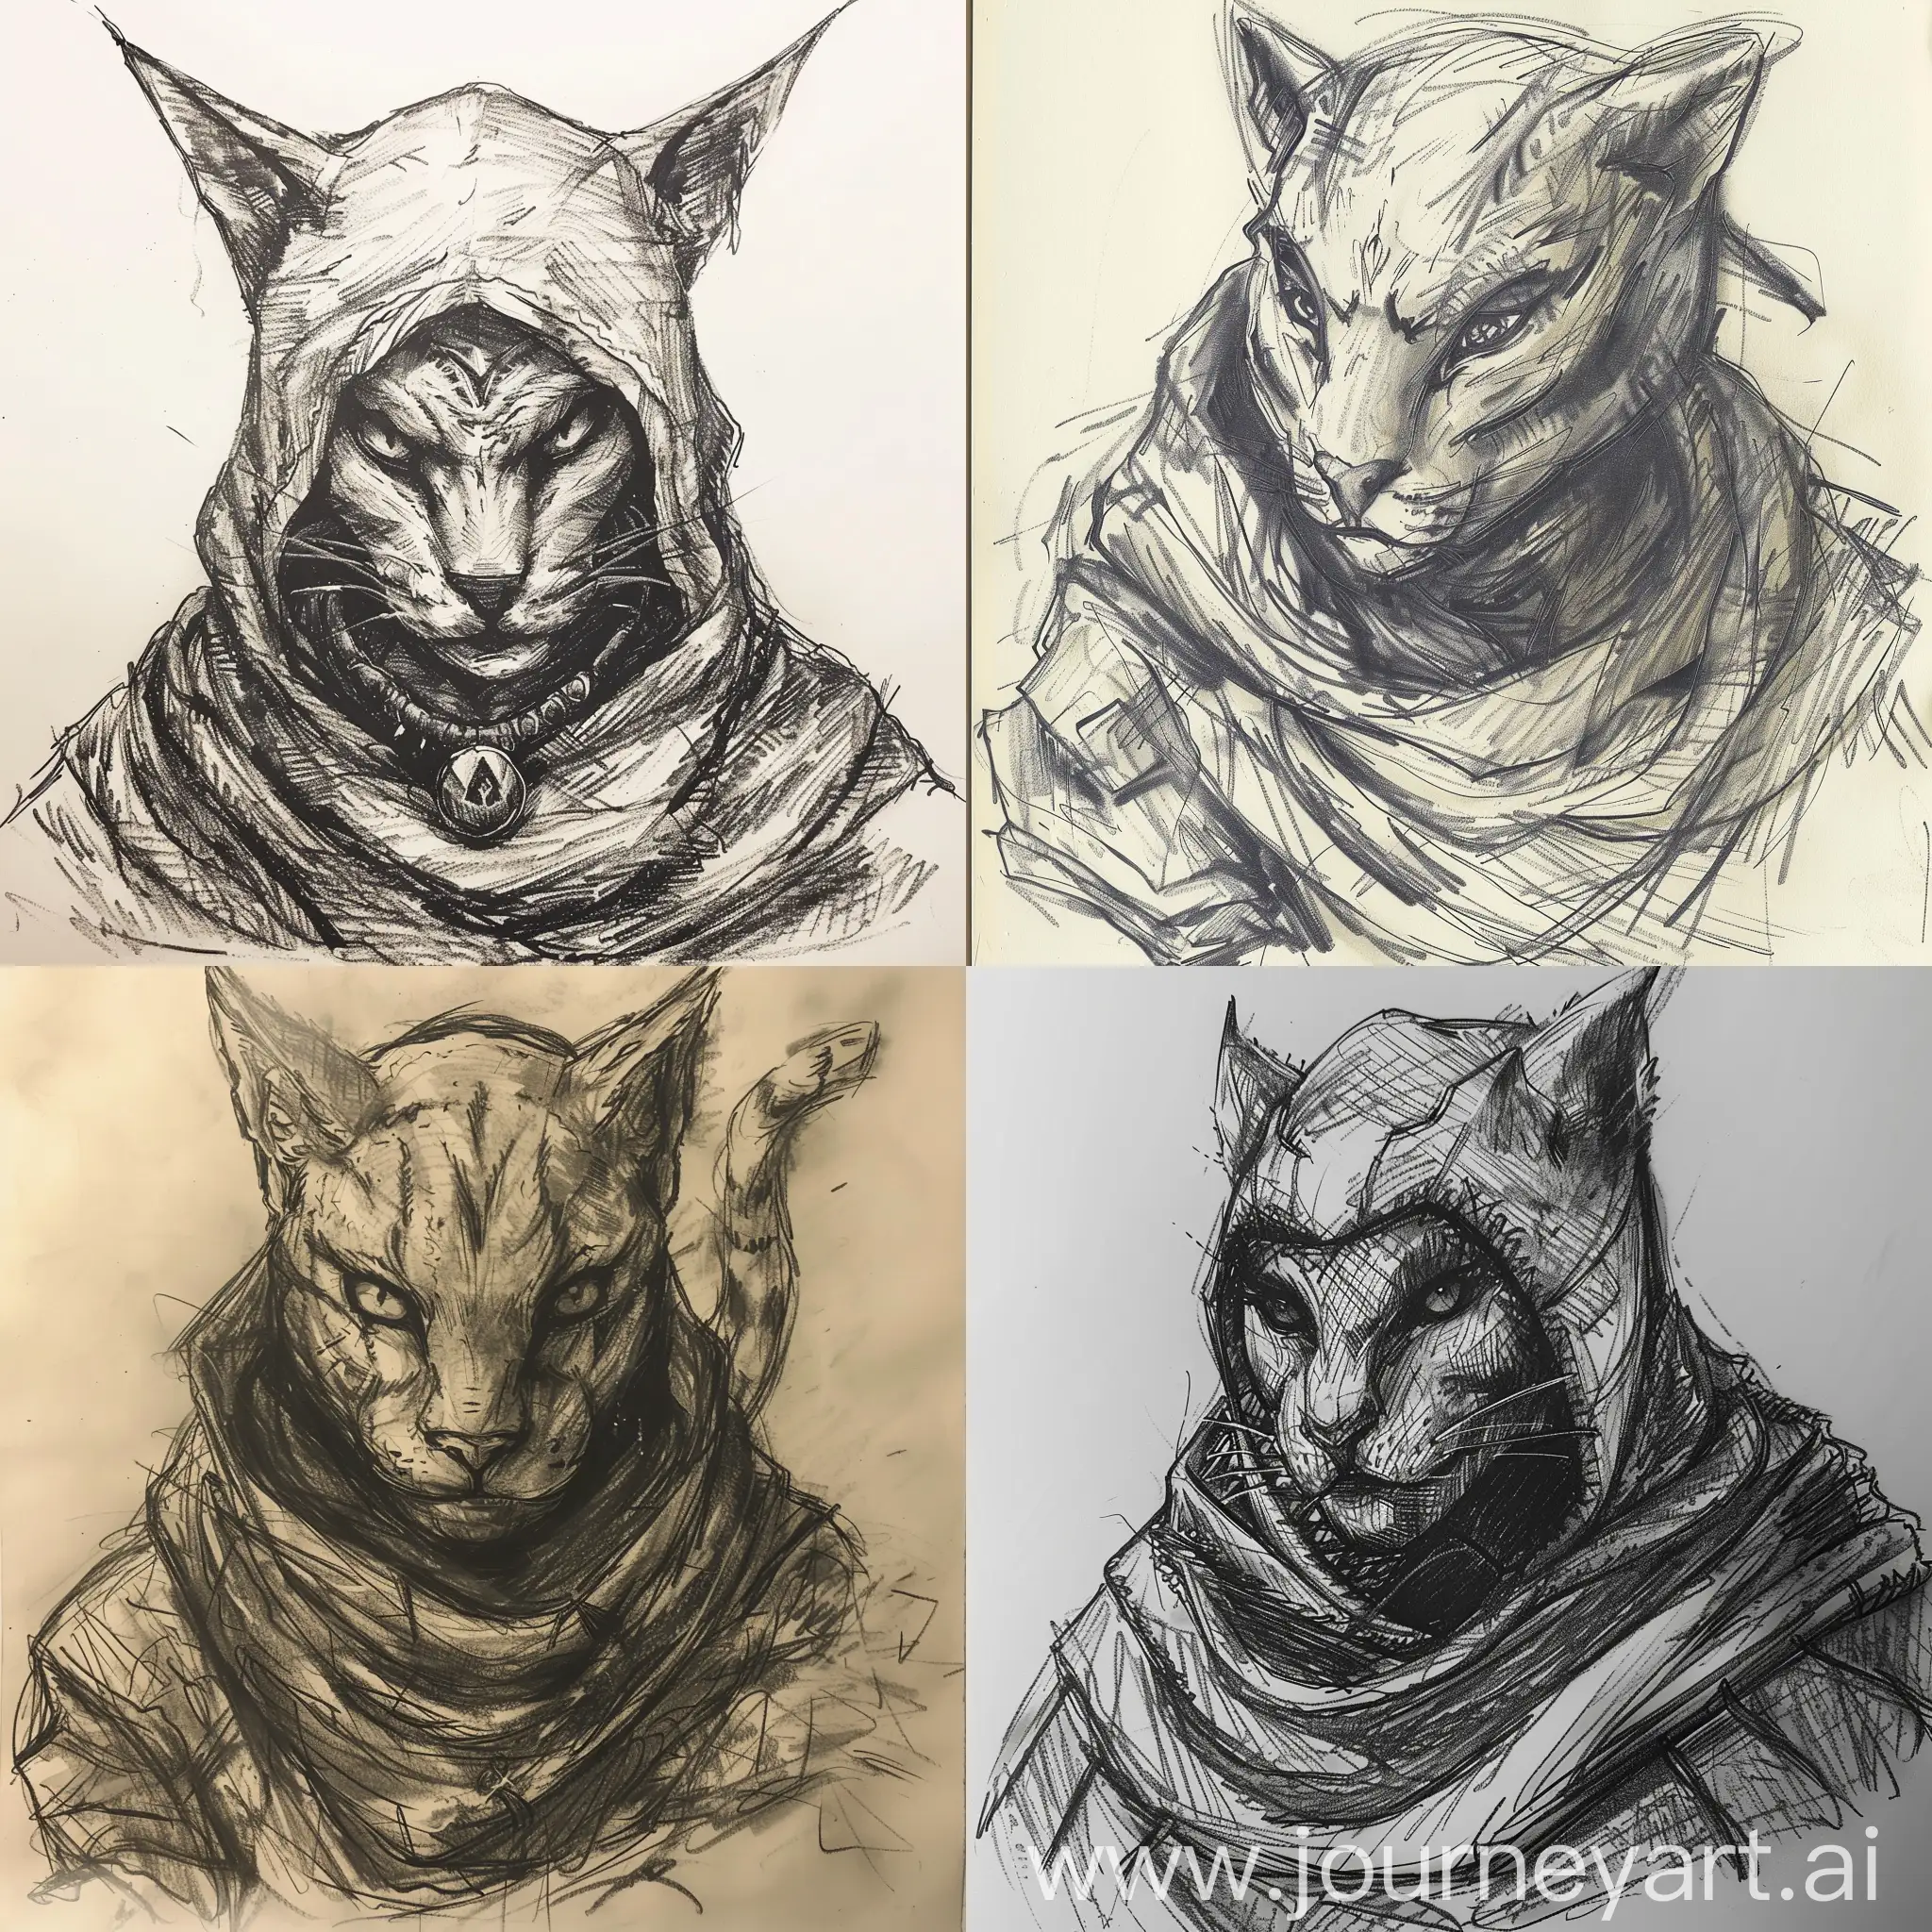 Skyrim-Khajiit-Sketch-Mysterious-Catlike-Creature-in-the-World-of-Skyrim